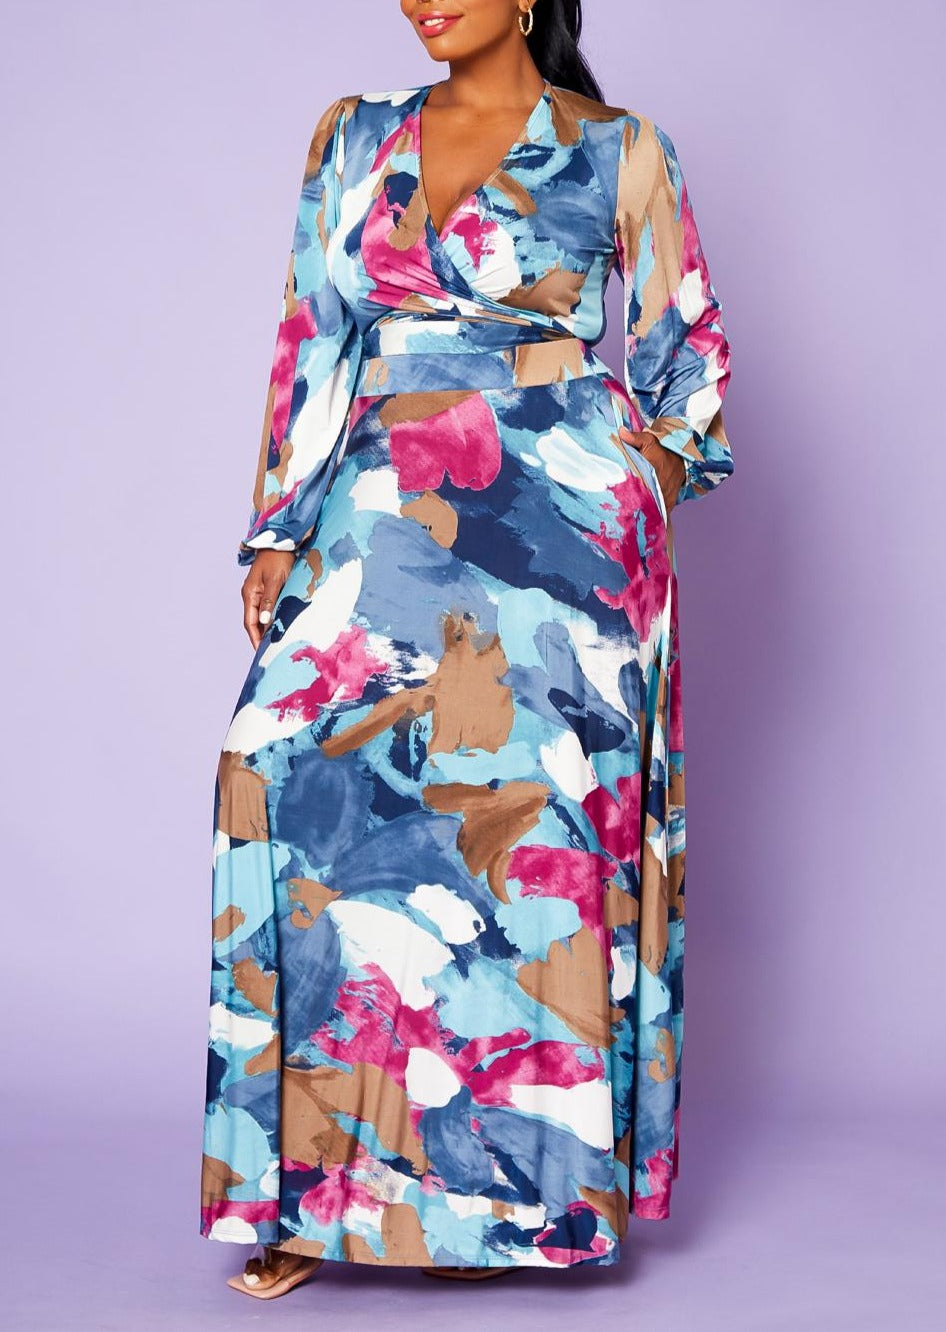 HI Curvy Plus Size Women Watermark Print Blouse and Maxi Skirt Set